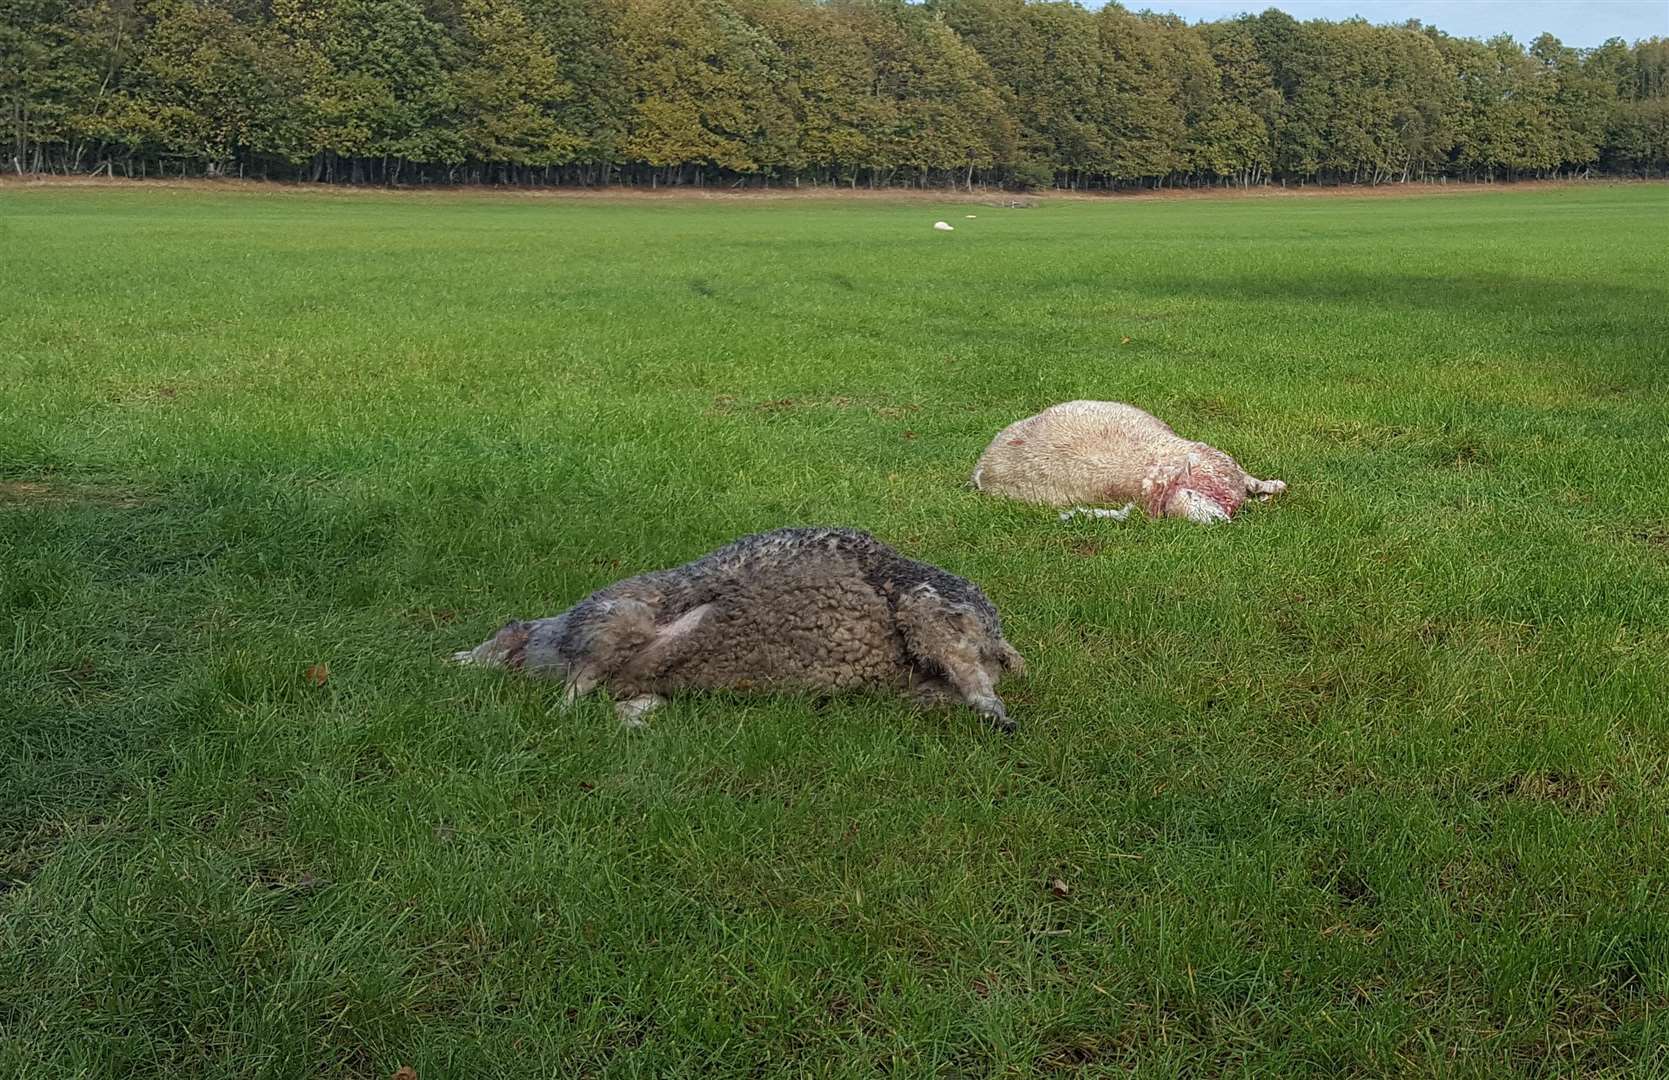 Sheep killed in a field last year